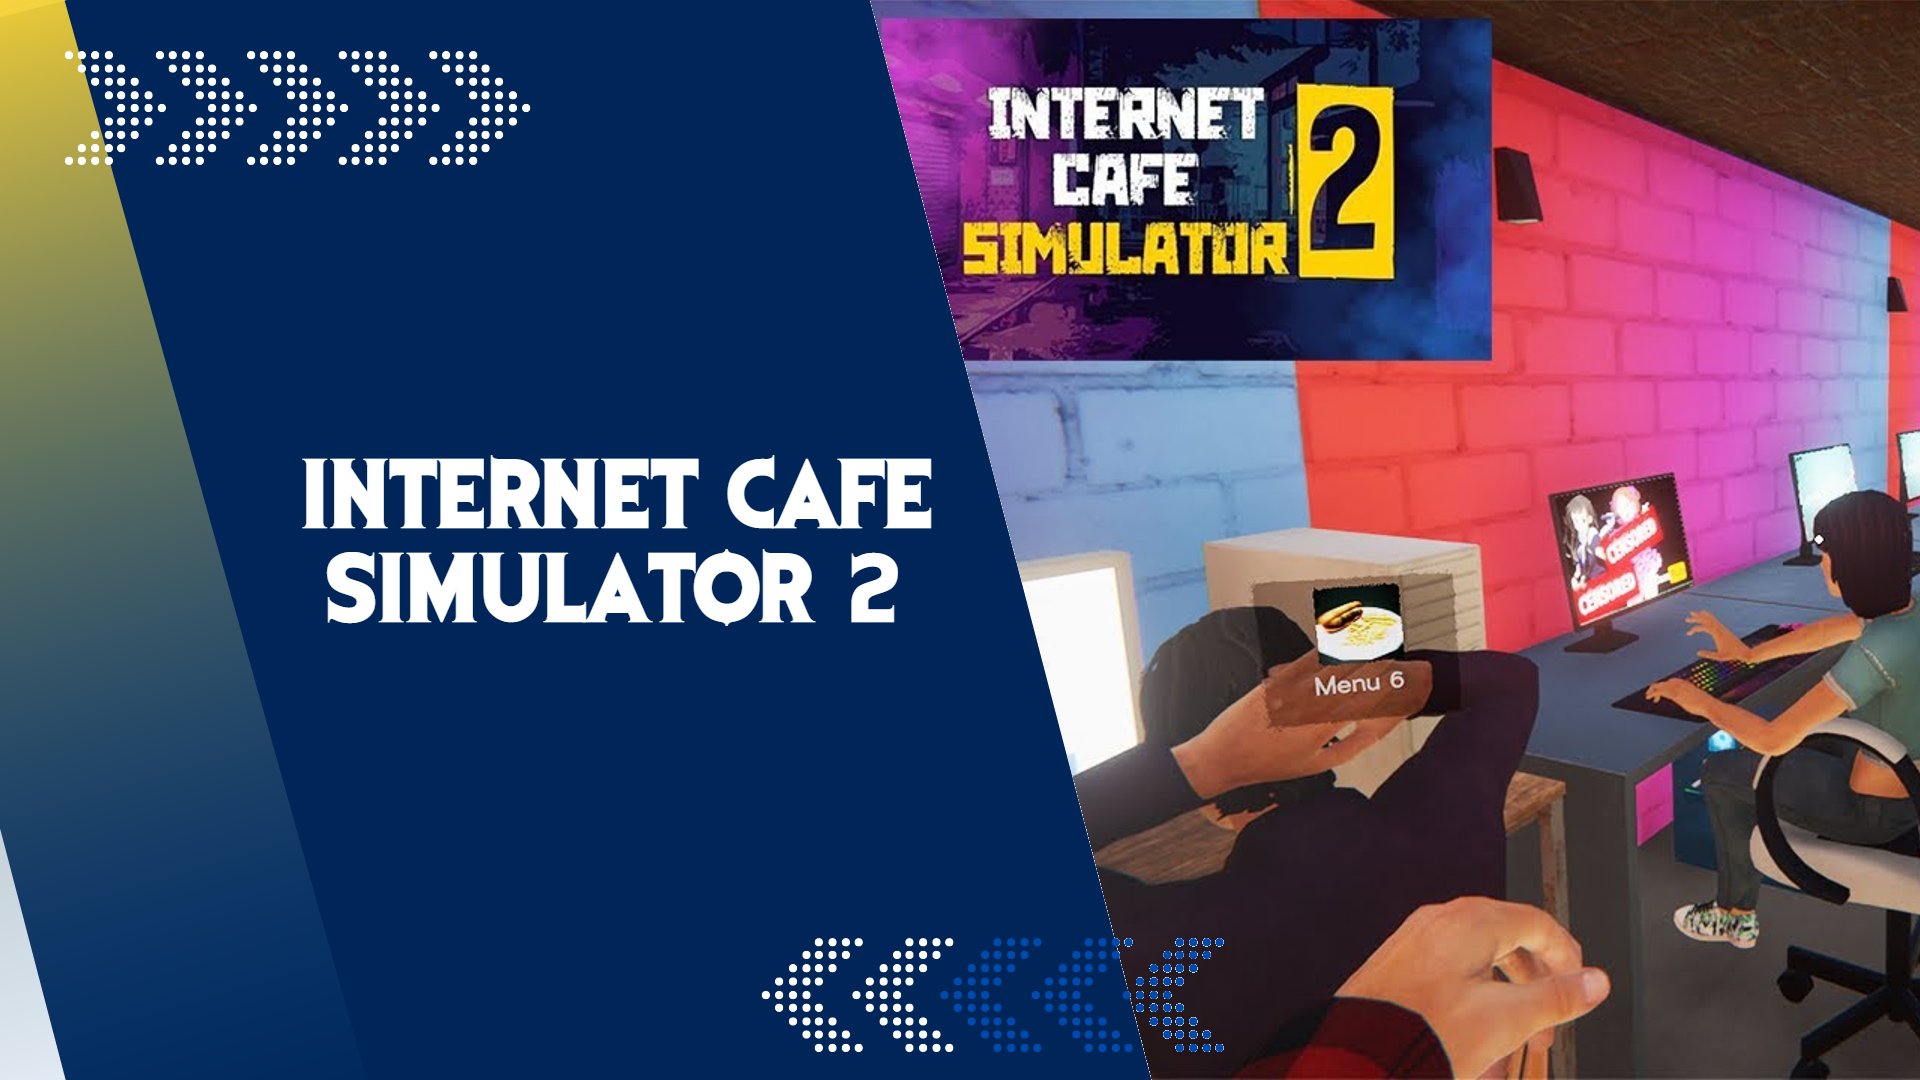 Internet Cafe Simulator майнкрафт. Internet Cafe Simulator 2 майнкрафт. Карта интернет кафе симулятор 2 в майнкрафт. Карта майнкрафт internet cafe simulator 2